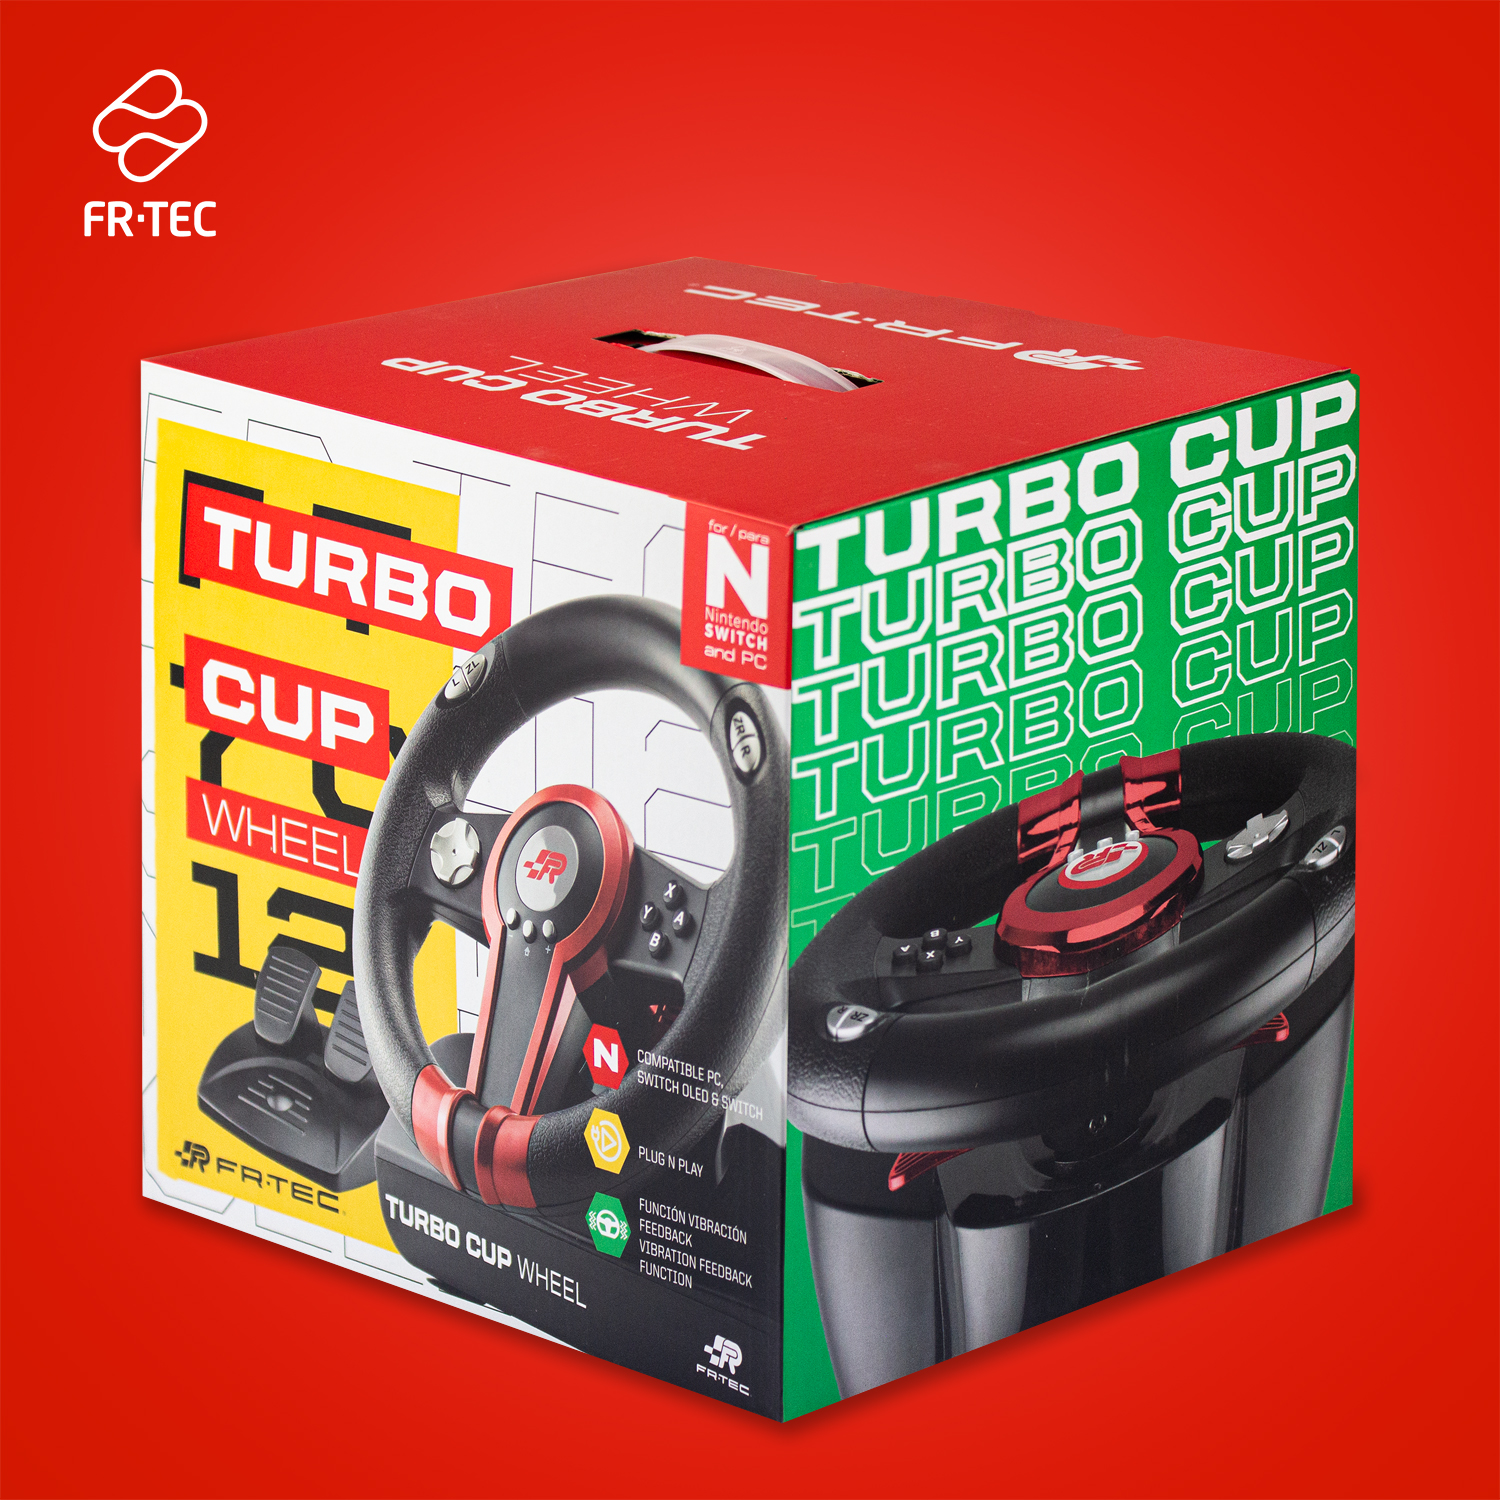 FT7012-Nintendo-Switch-Turbo-Cup-Wheel-5